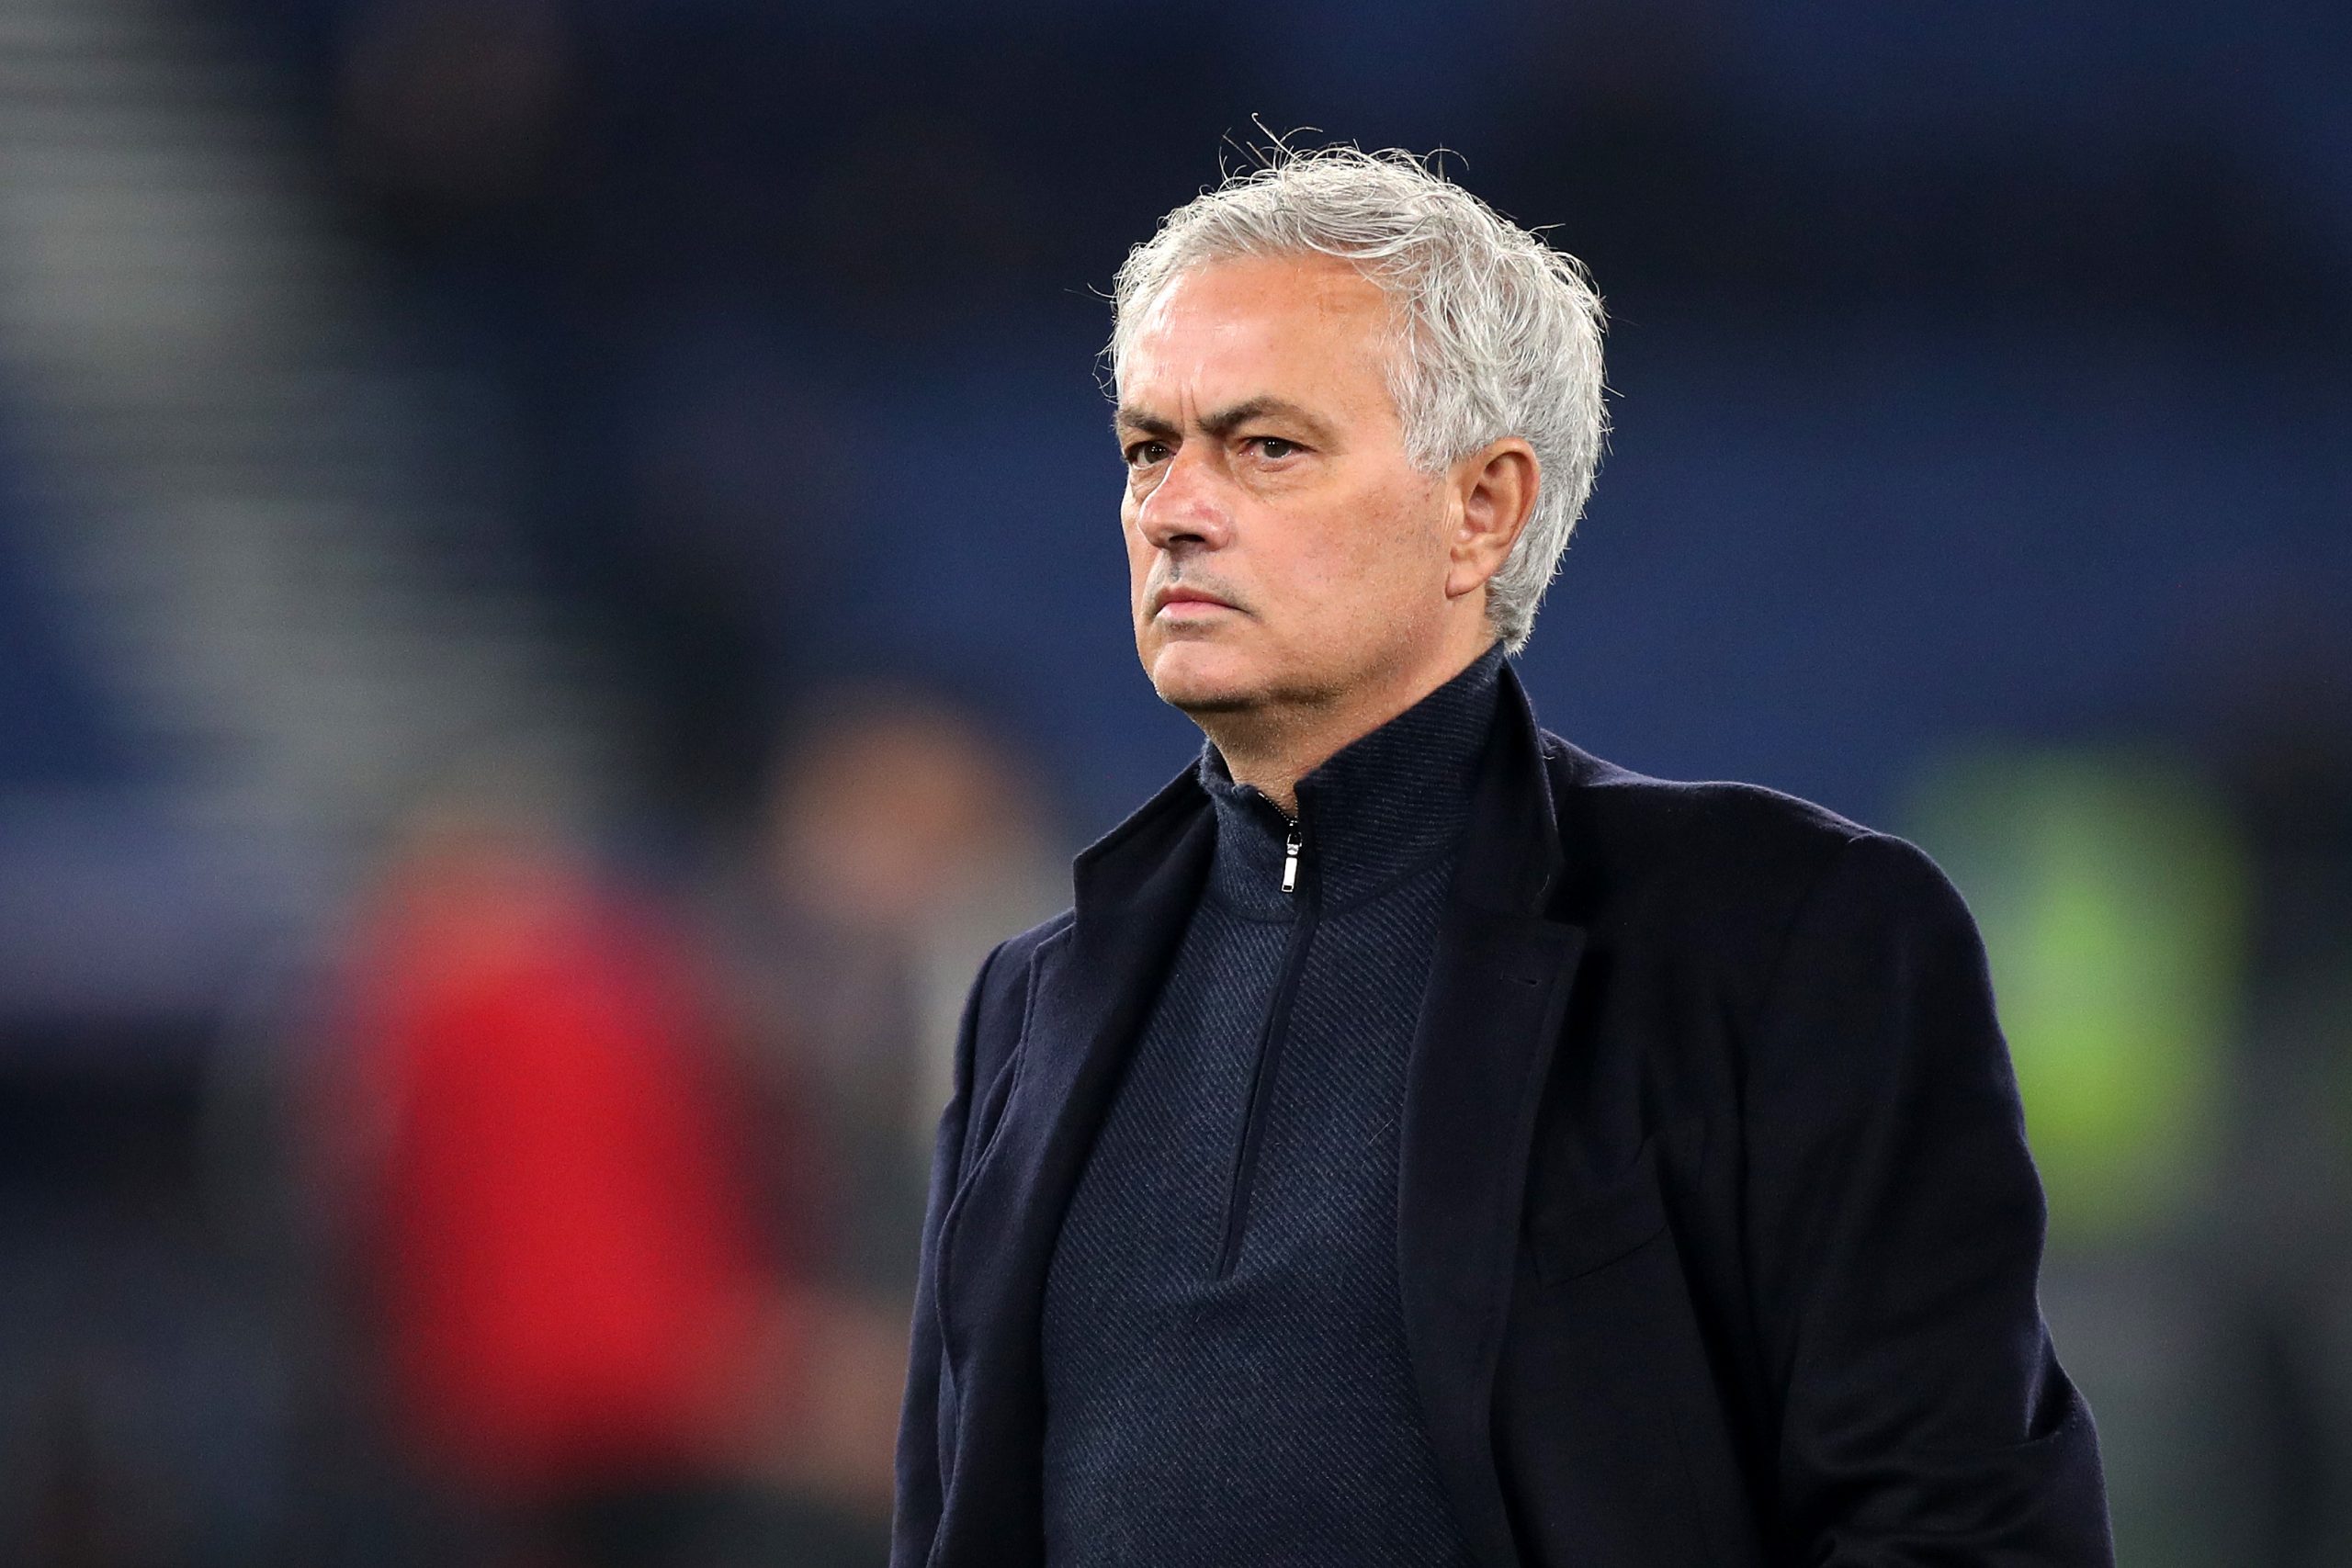 Journalist makes sensational claim that Jose Mourinho planned Man United sack